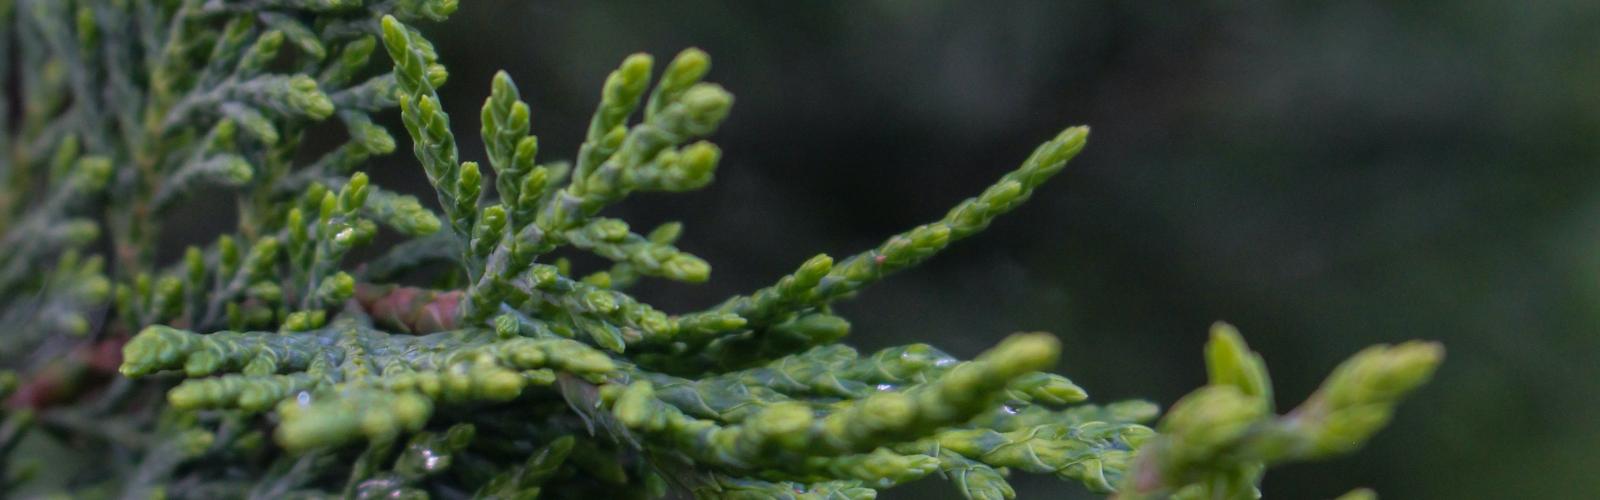 Cupressocyparis x leylandii : L'Élégance Verte des Cyprès de Leyland